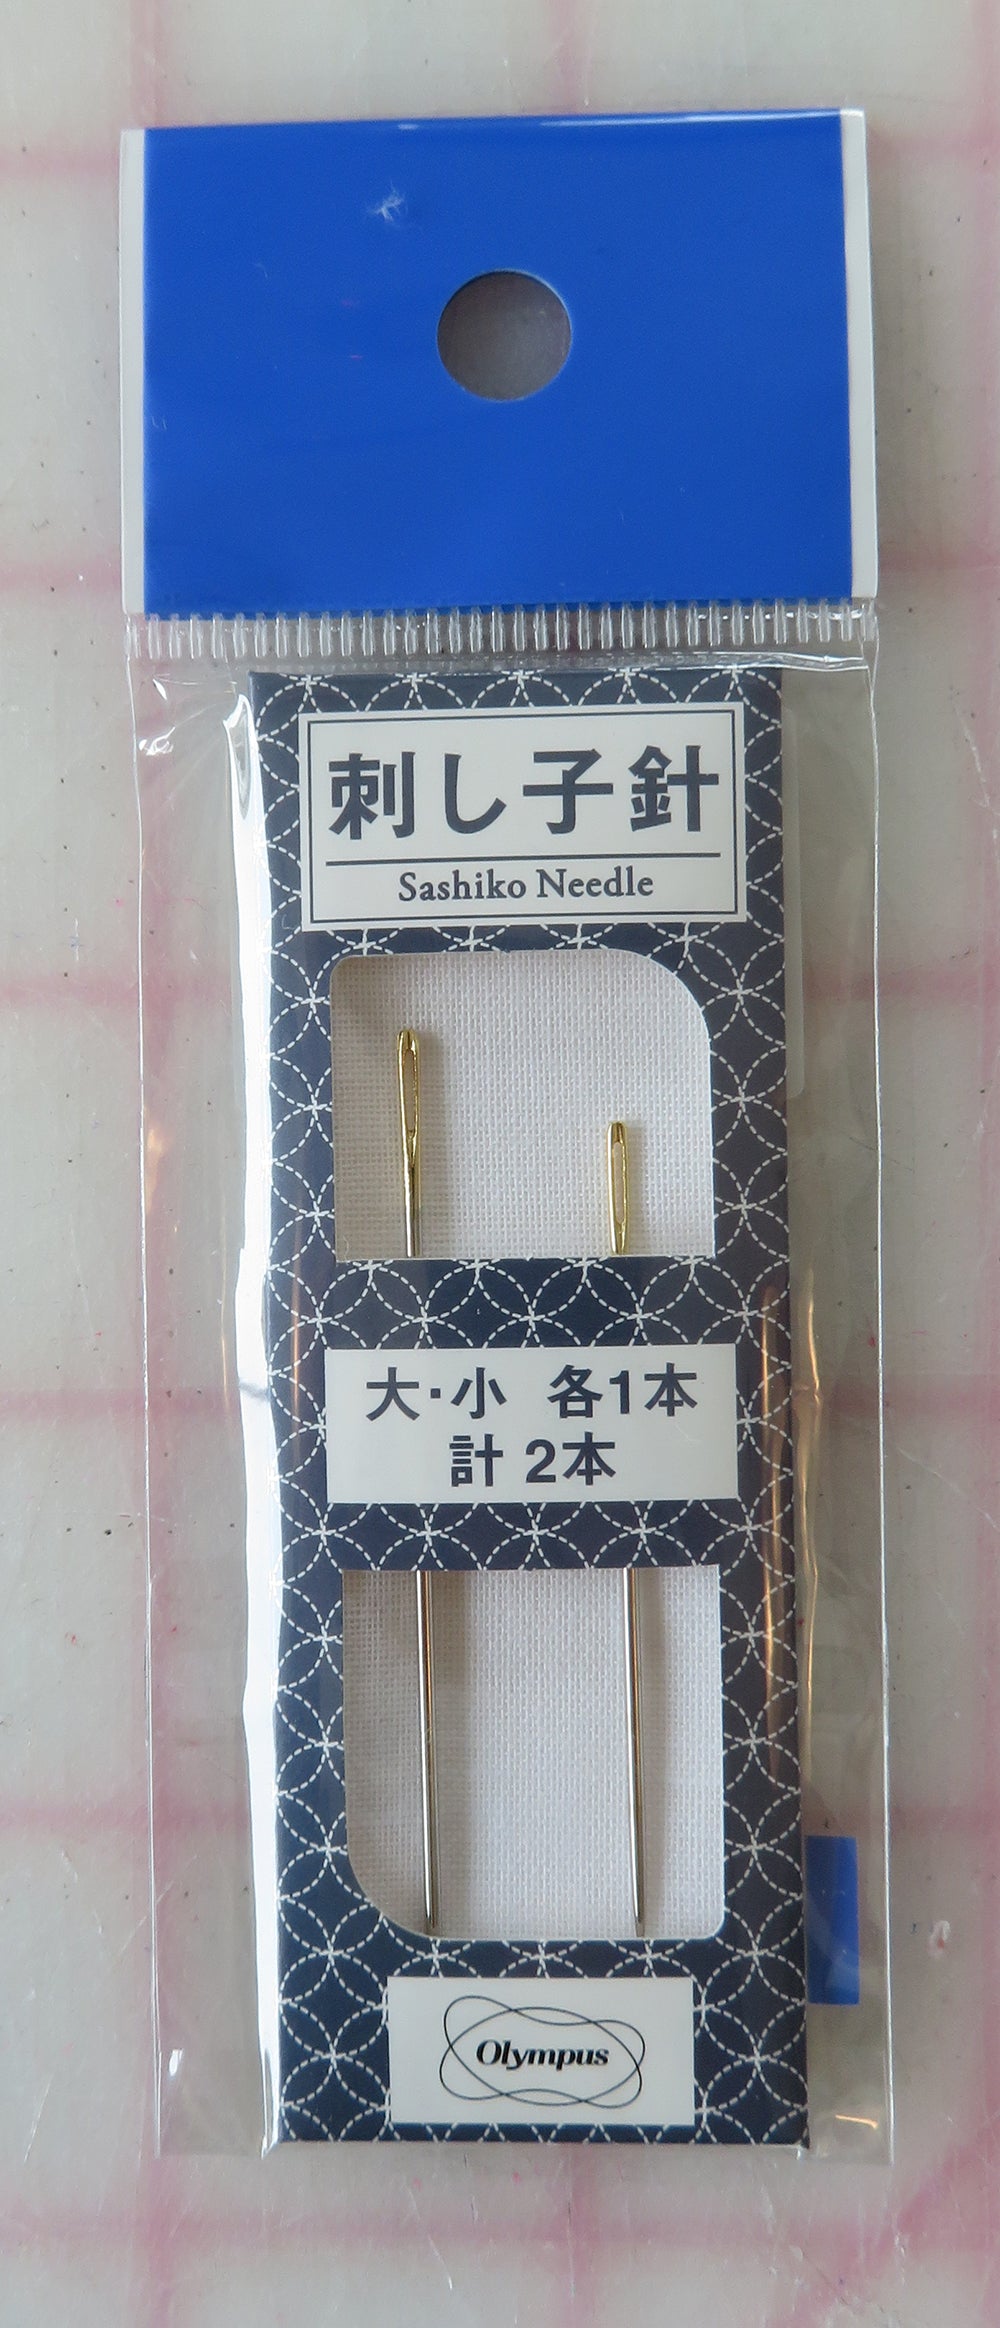 Olympus Sashiko Needle 2 Count